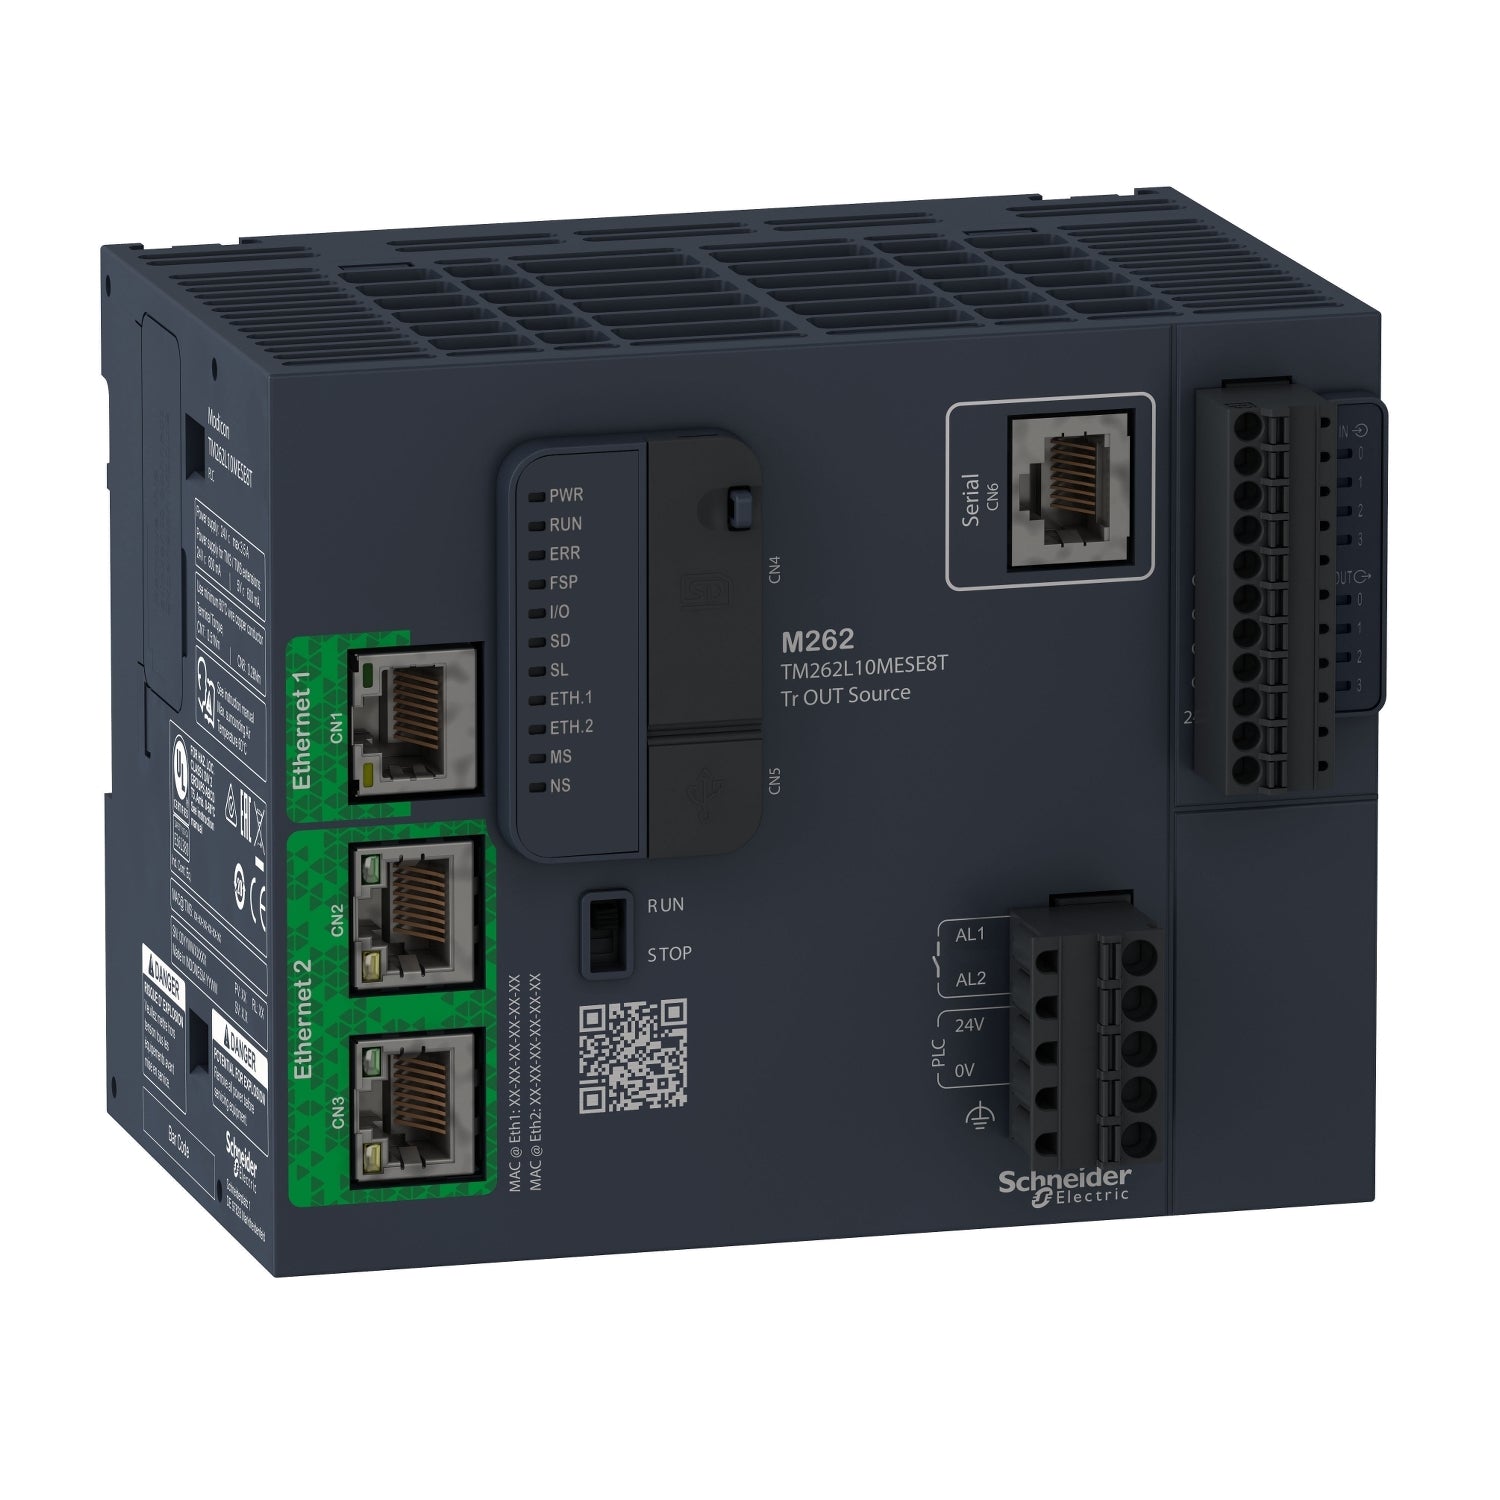 TM262L10MESE8T | Schneider Electric Logic controller, Modicon M262, 5ns per instruction, Ethernet